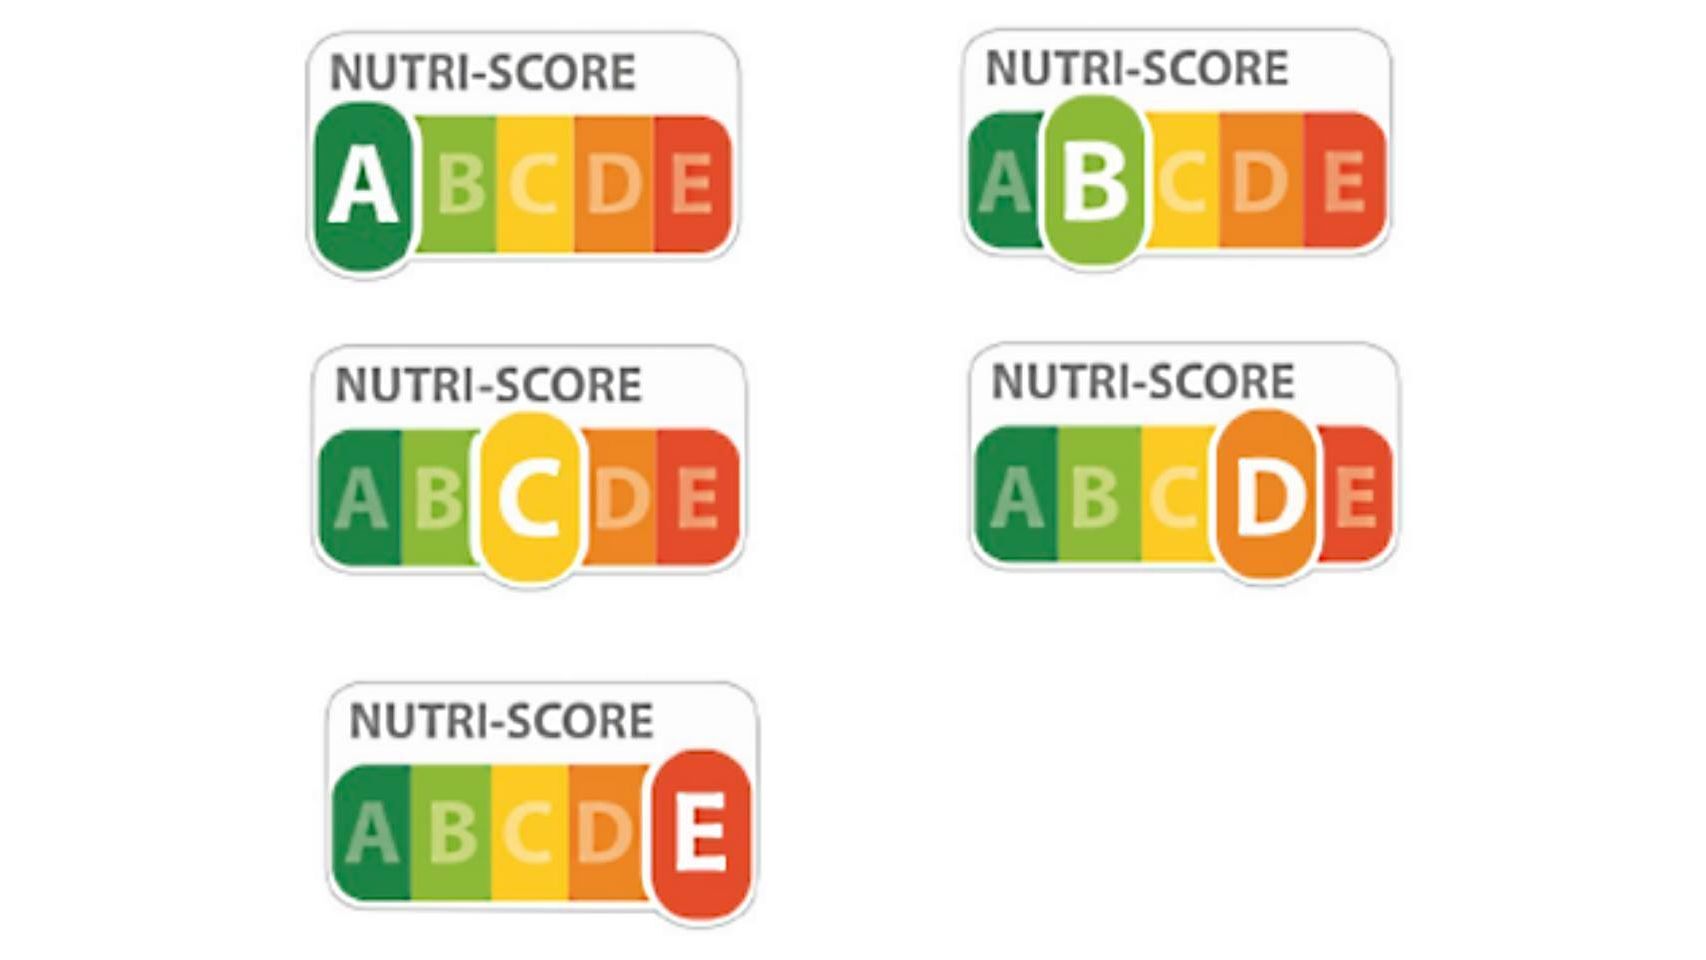 El Nutri-Score tiene 6 niveles